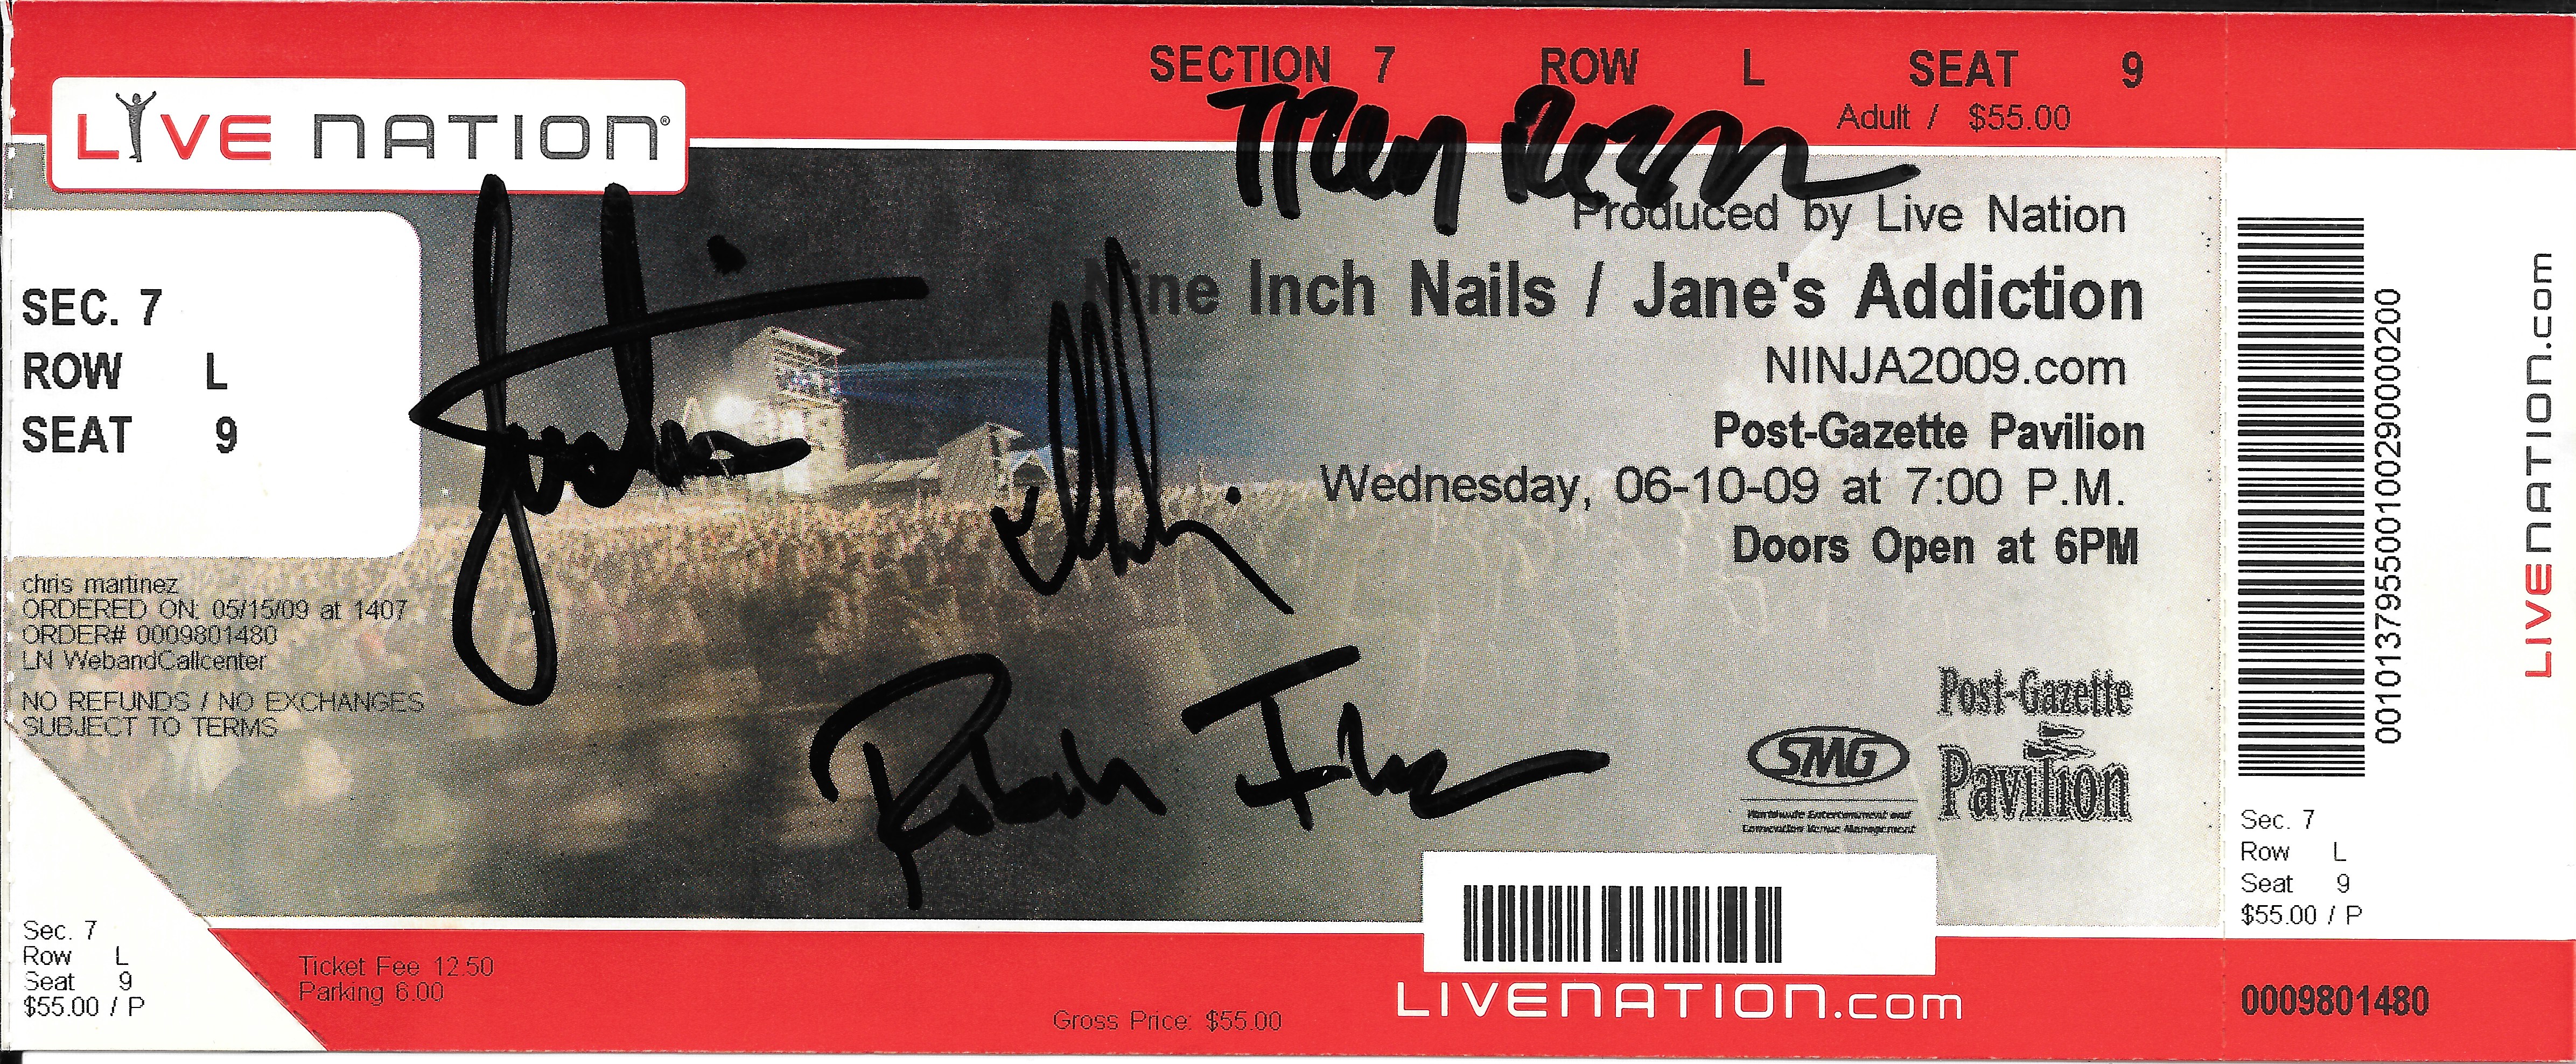 2009/06/10 Ticket